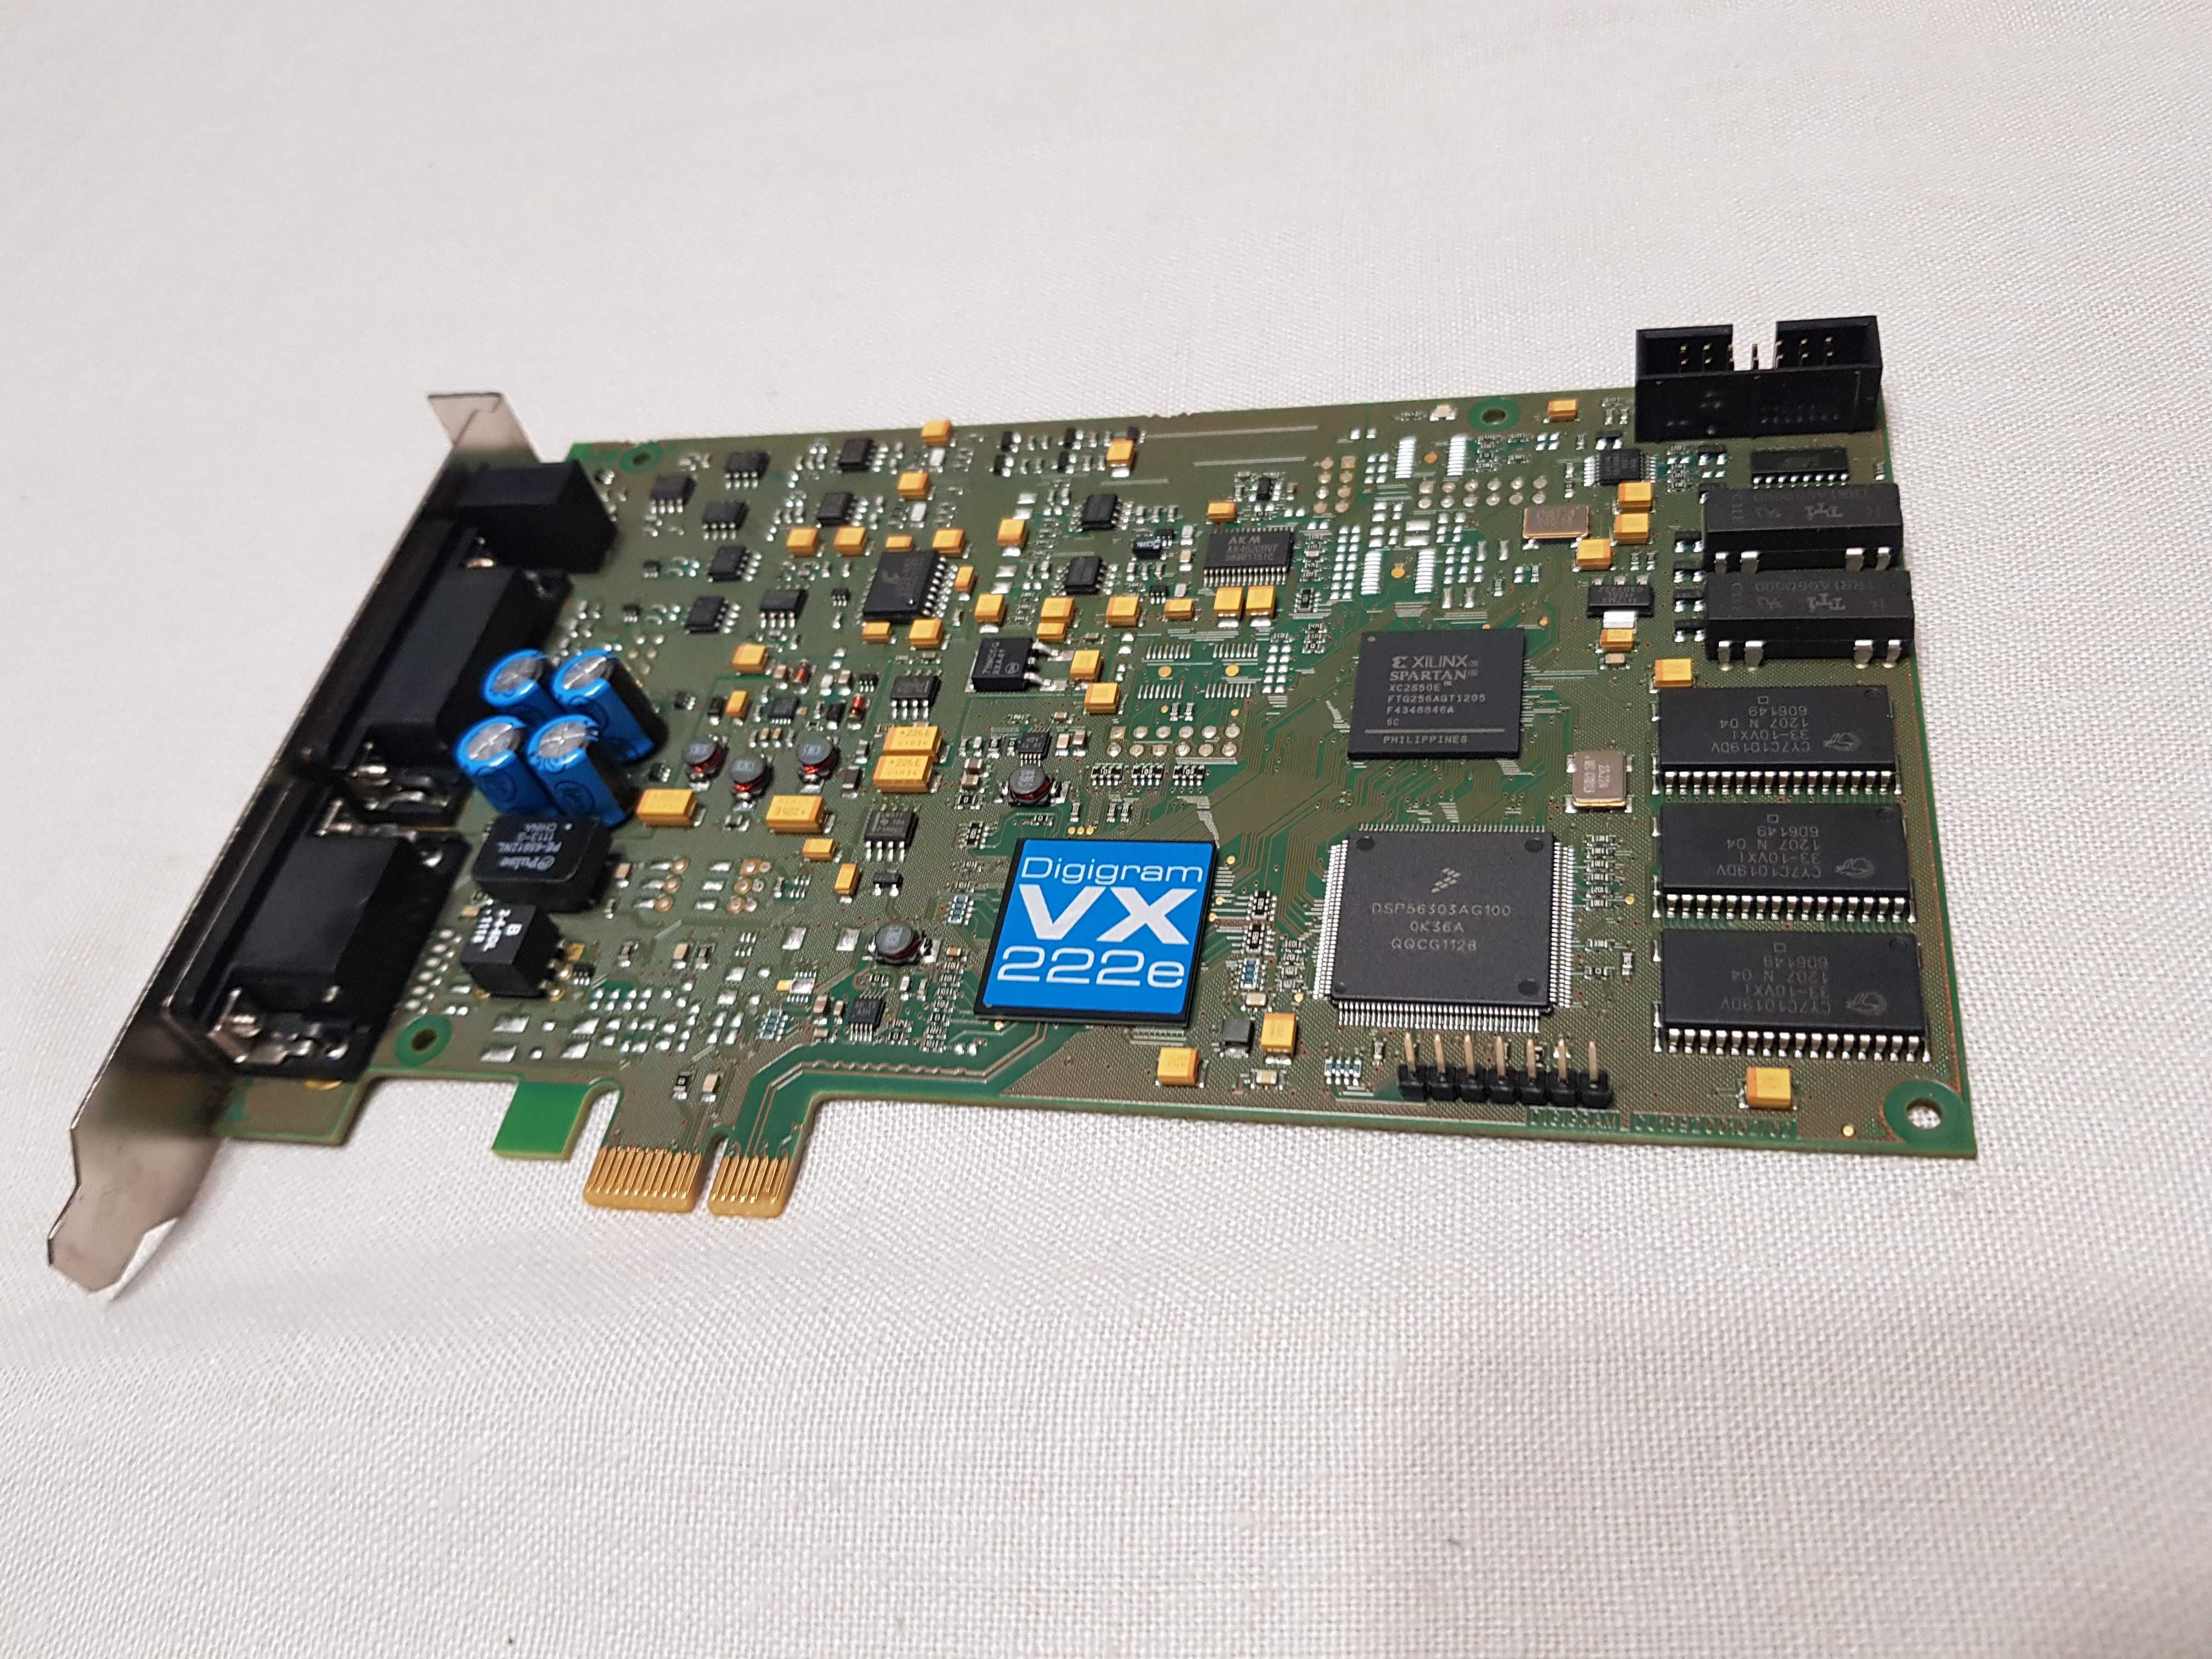 Digigram VX222e 24bit192KHz AES Digital Broadcast Audio PCIe Card